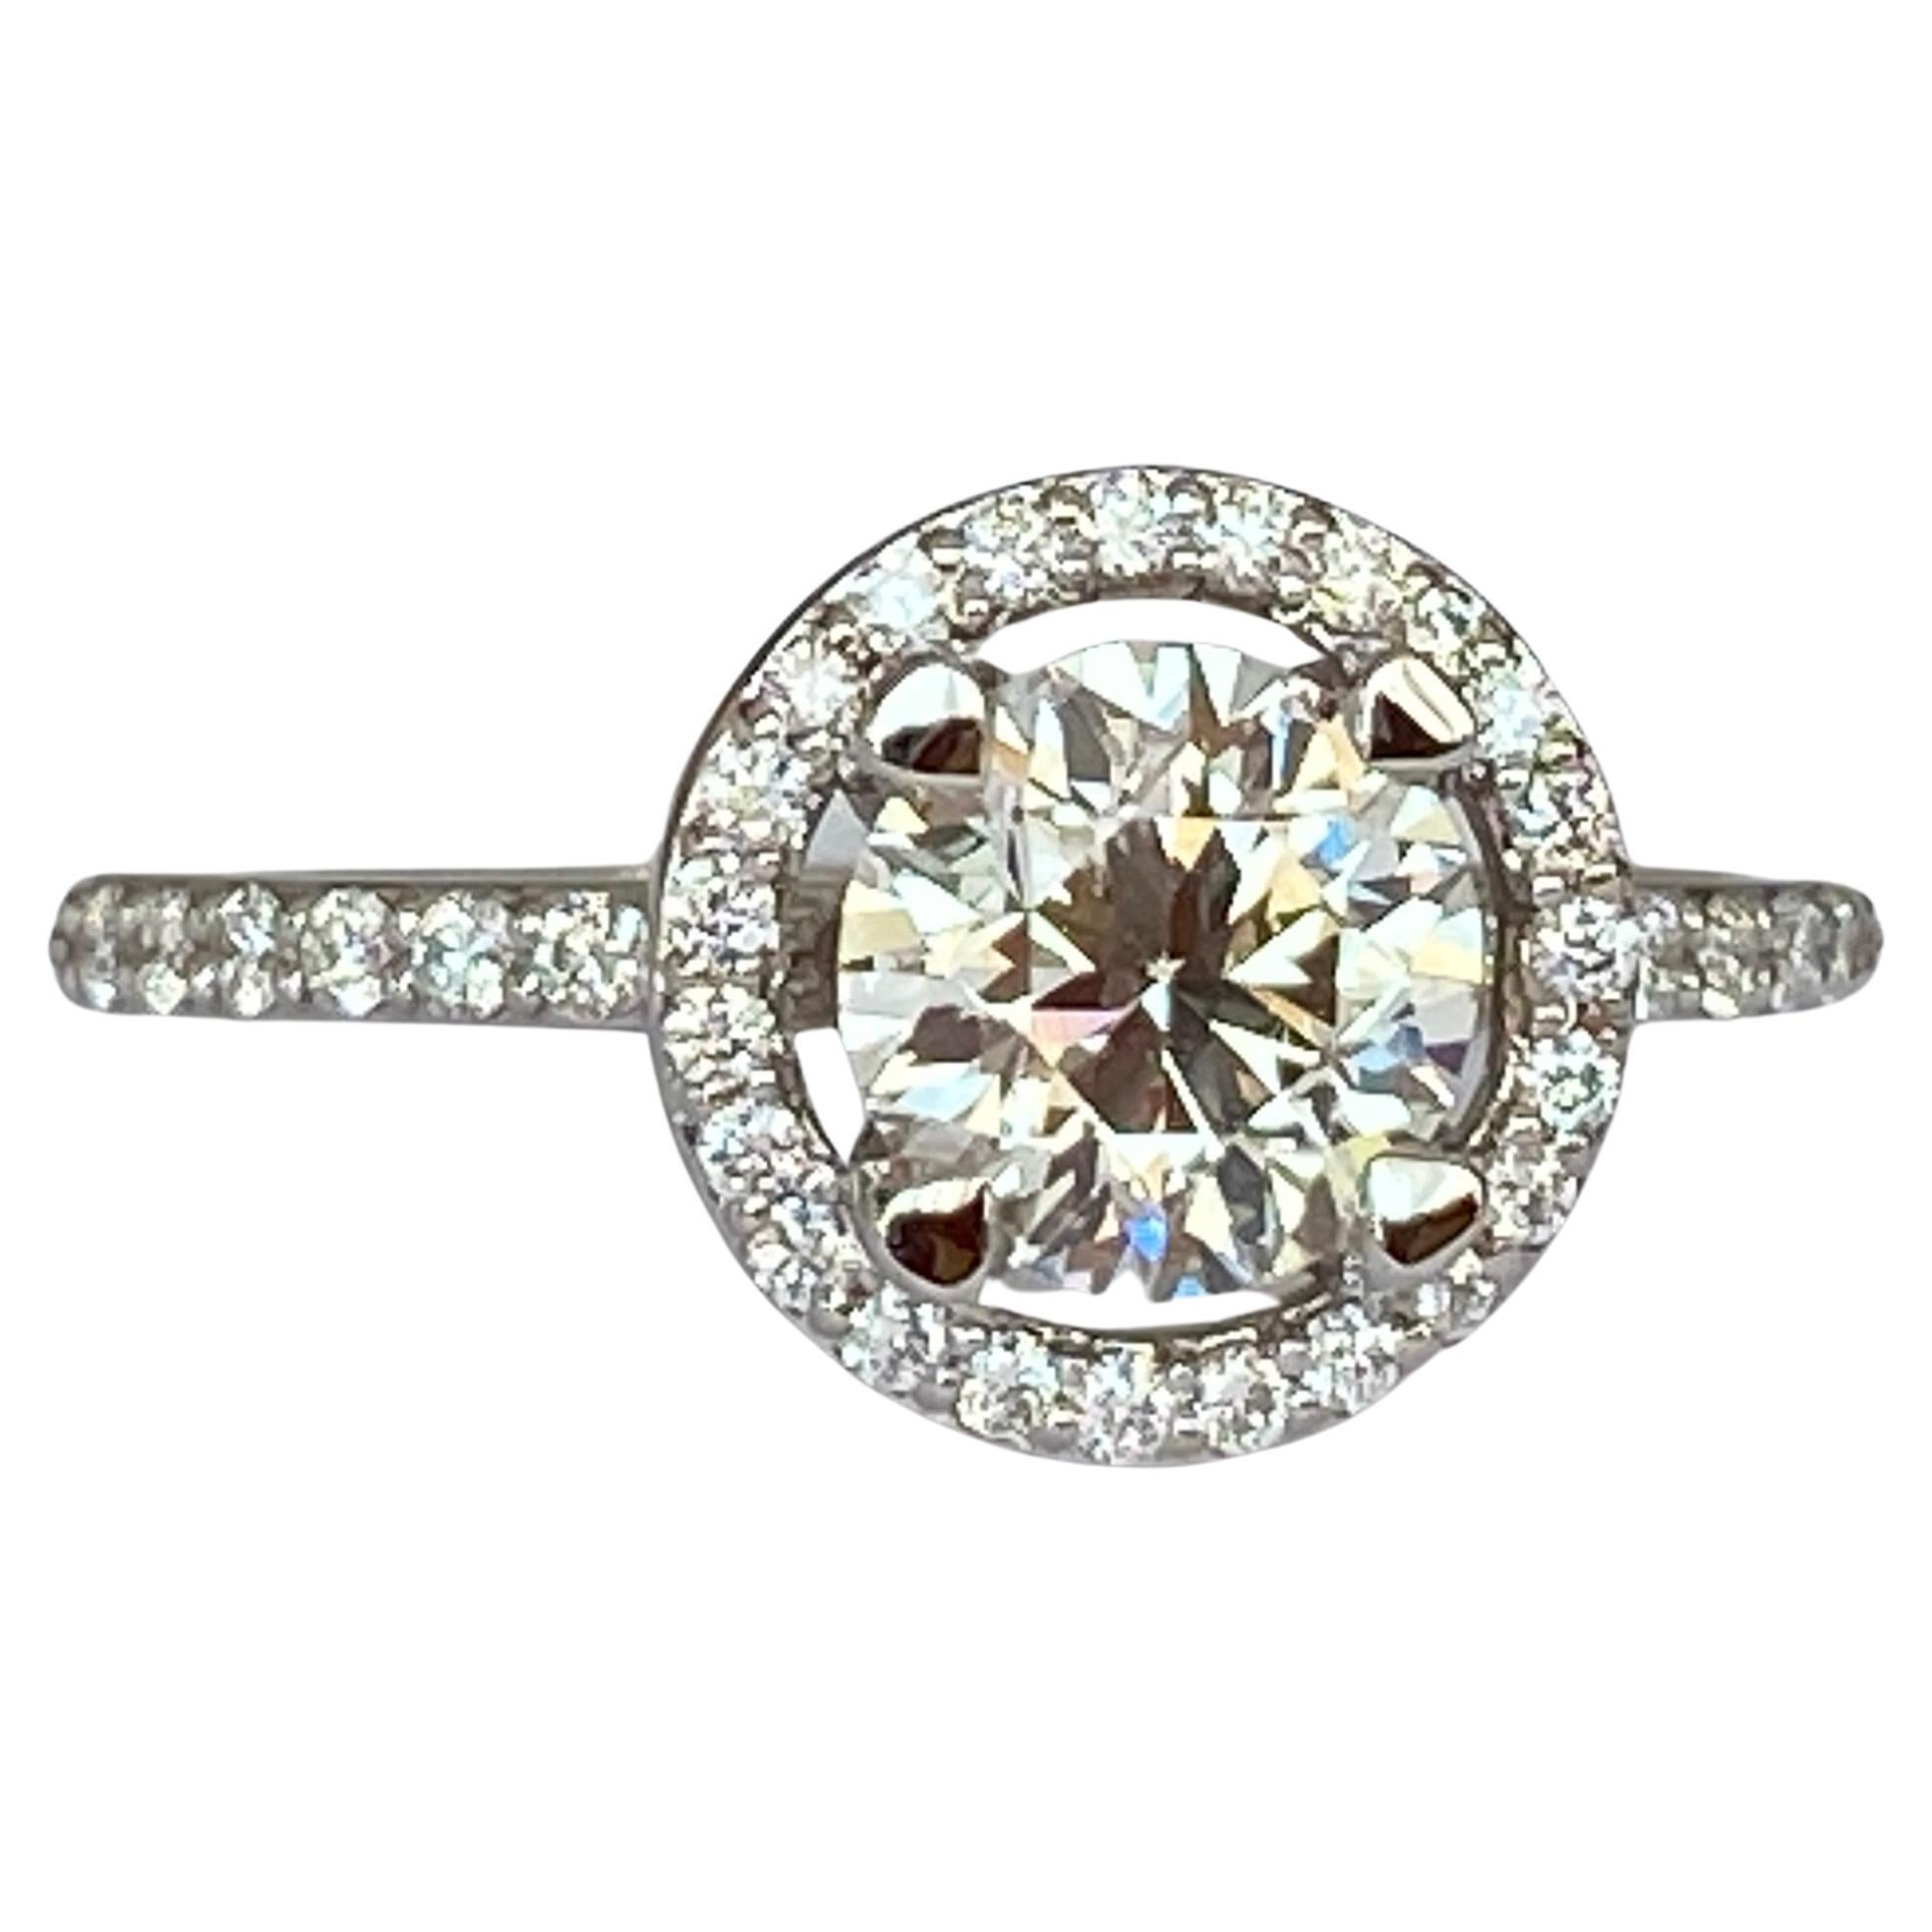 ALGT Certificied 1.36 Carat Diamond Engagement Ring